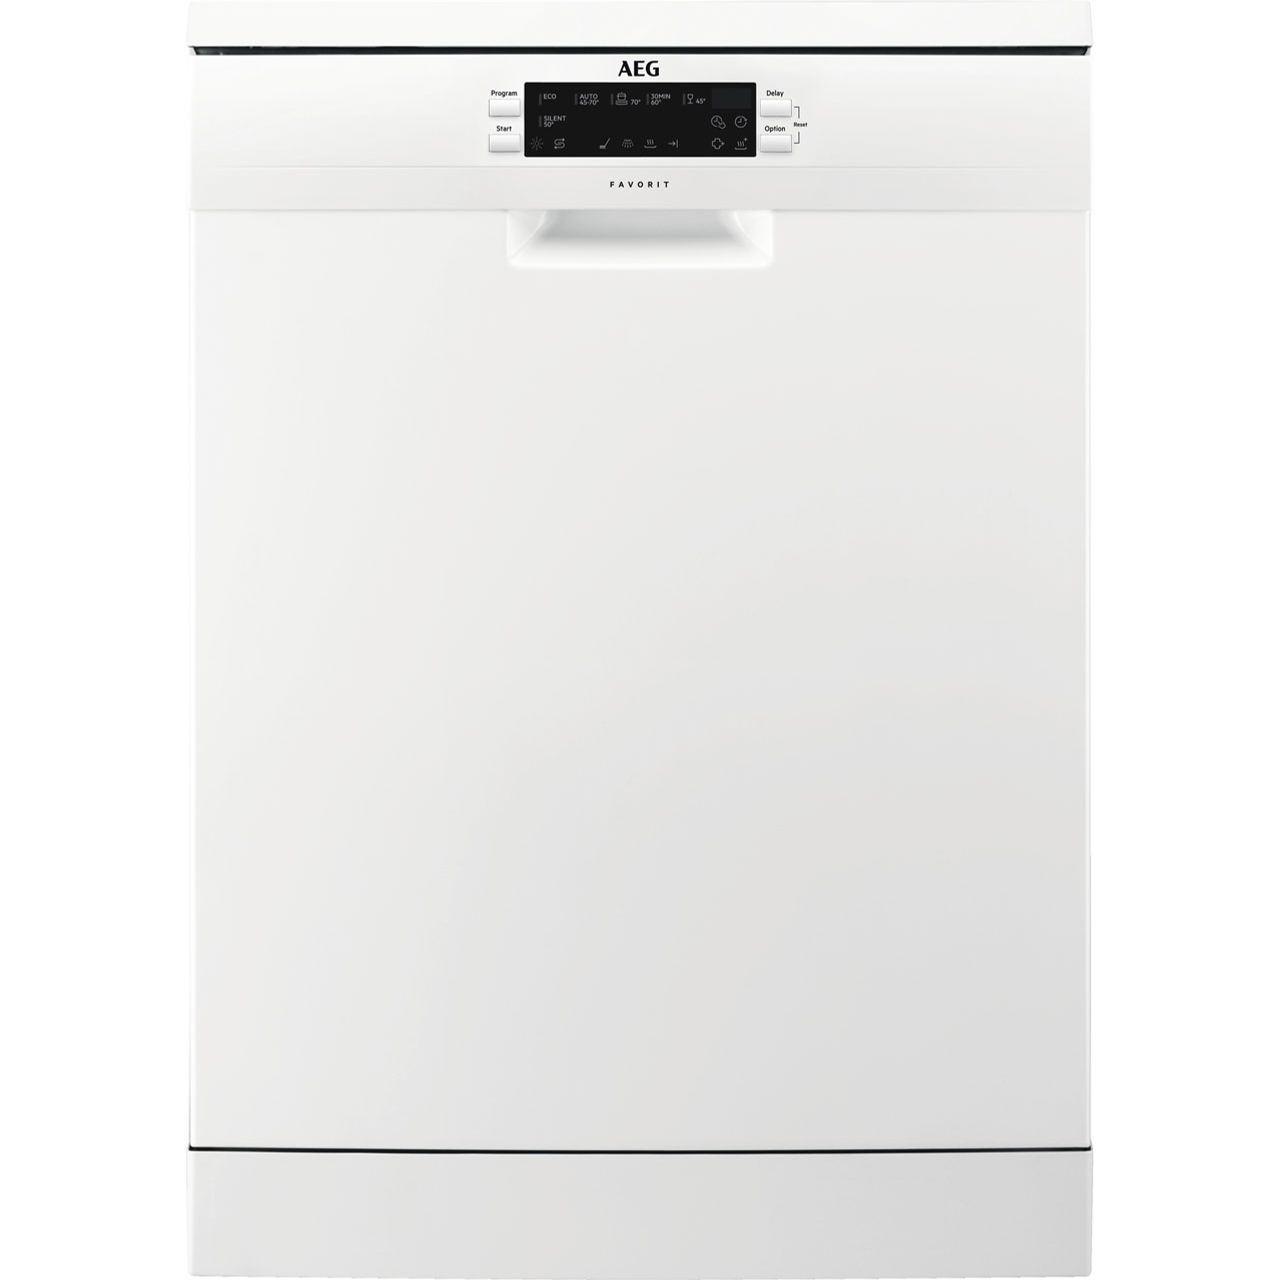 AEG FFE62620PW Standard Dishwasher Review